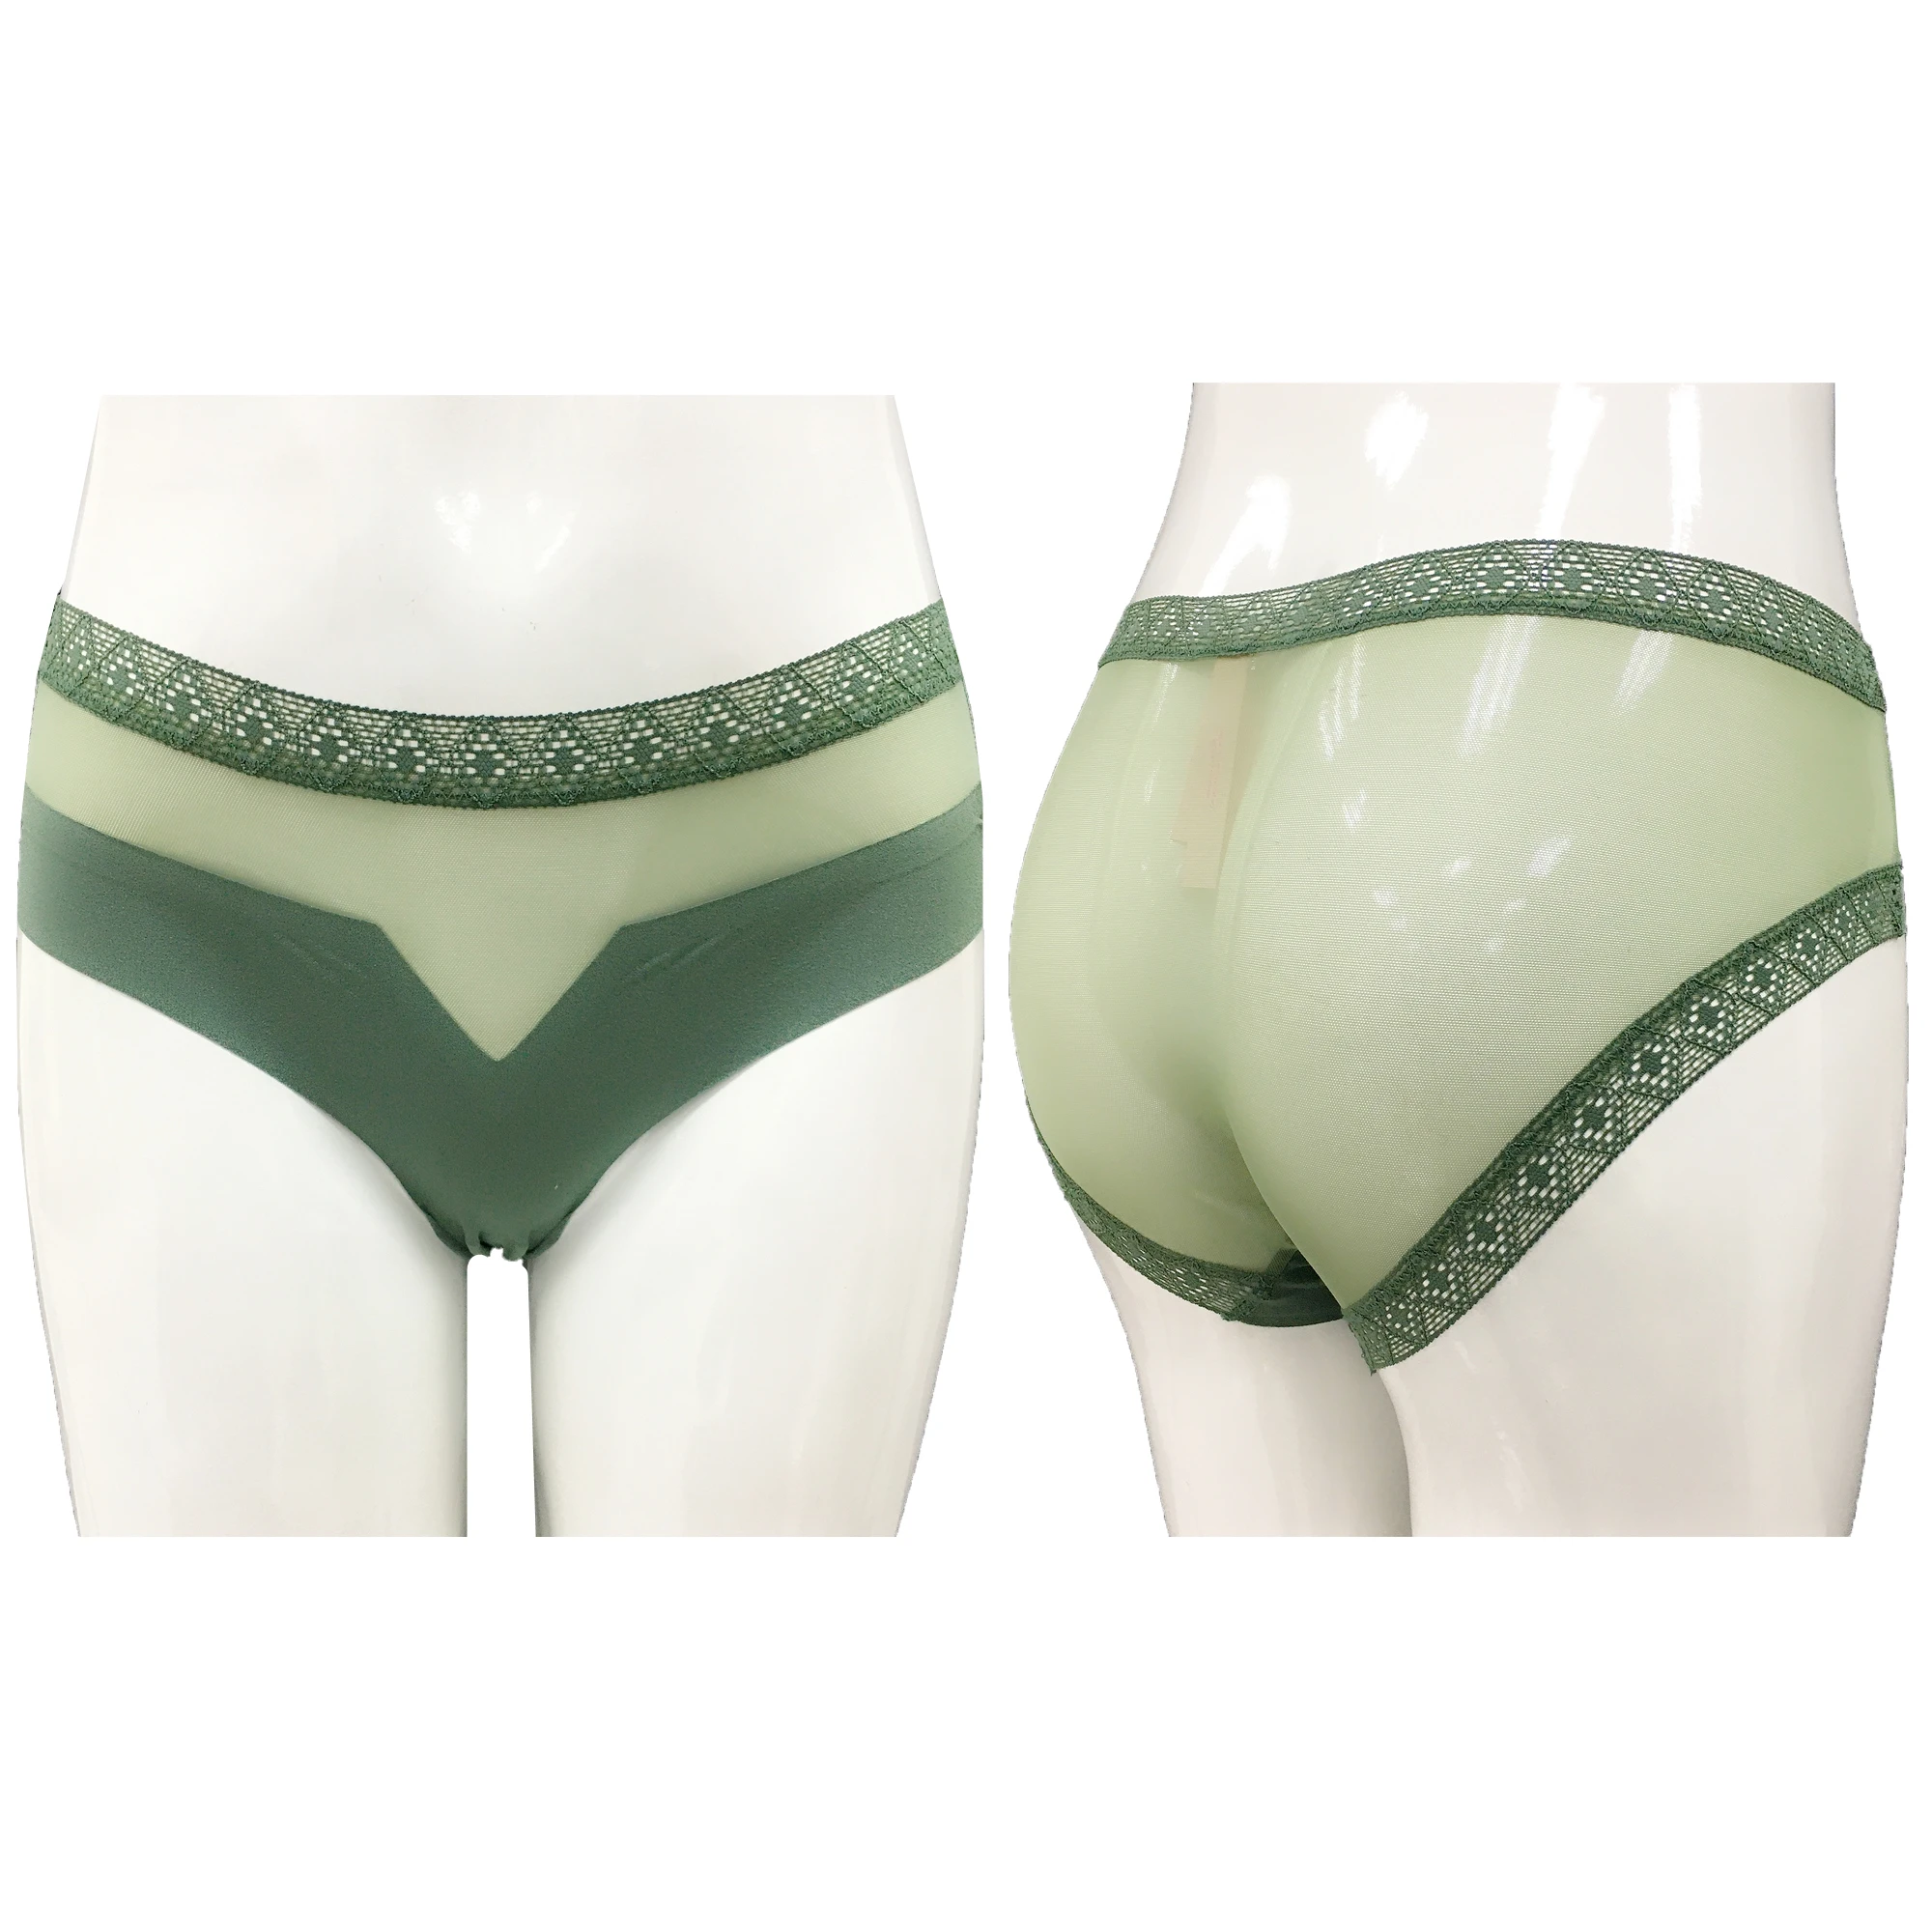 

2021 Custom Women Under Wears panties Sexy Nylon spandex Solid Color Lingerie girl's Underwear, Peacock green